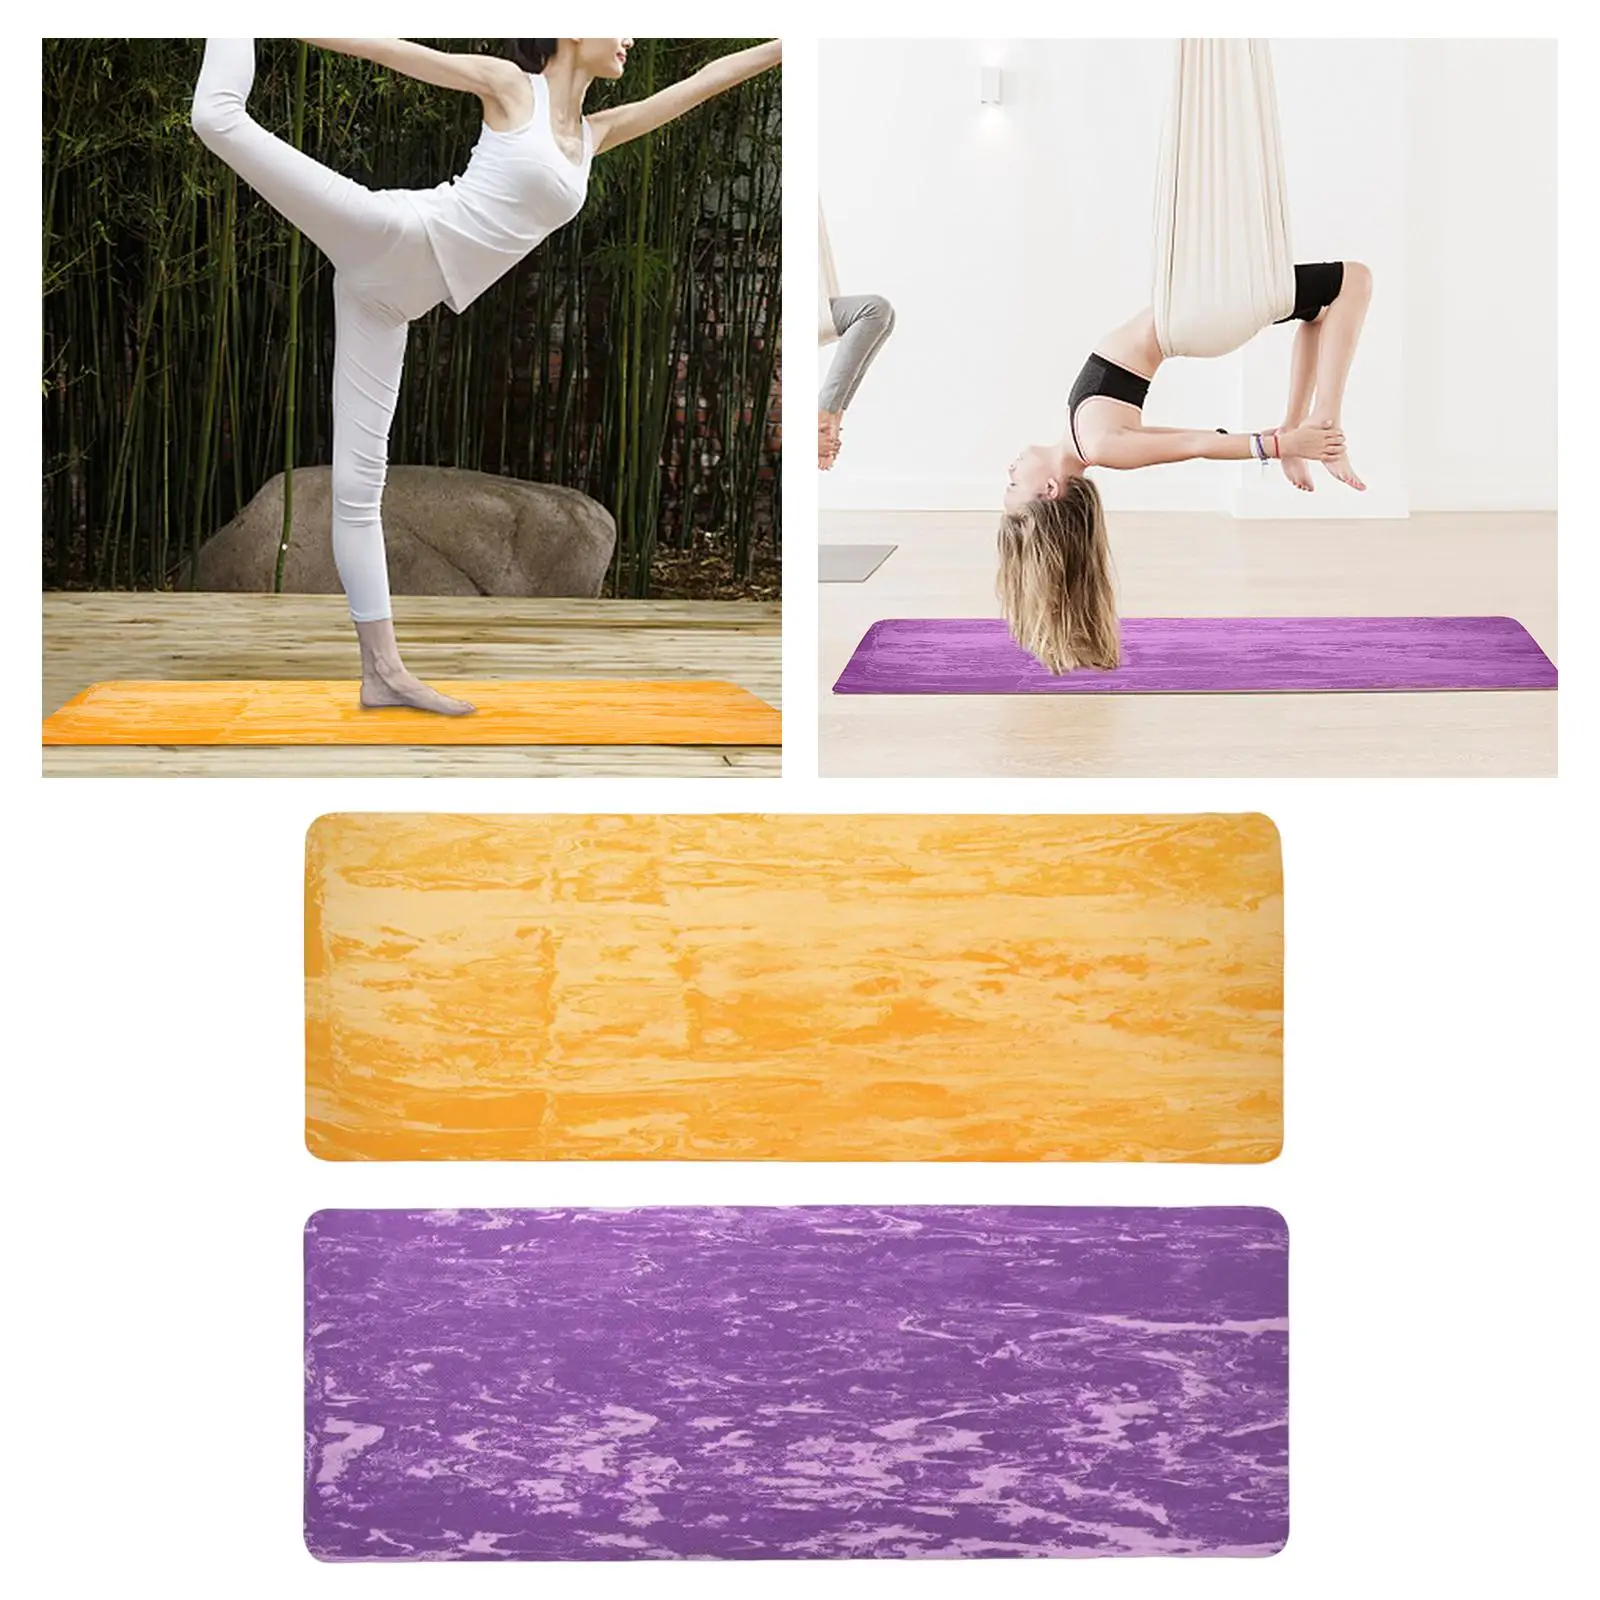 Exercise Yoga Mat Workout Pilates Fitness Equipment Dancing Cushion Portable